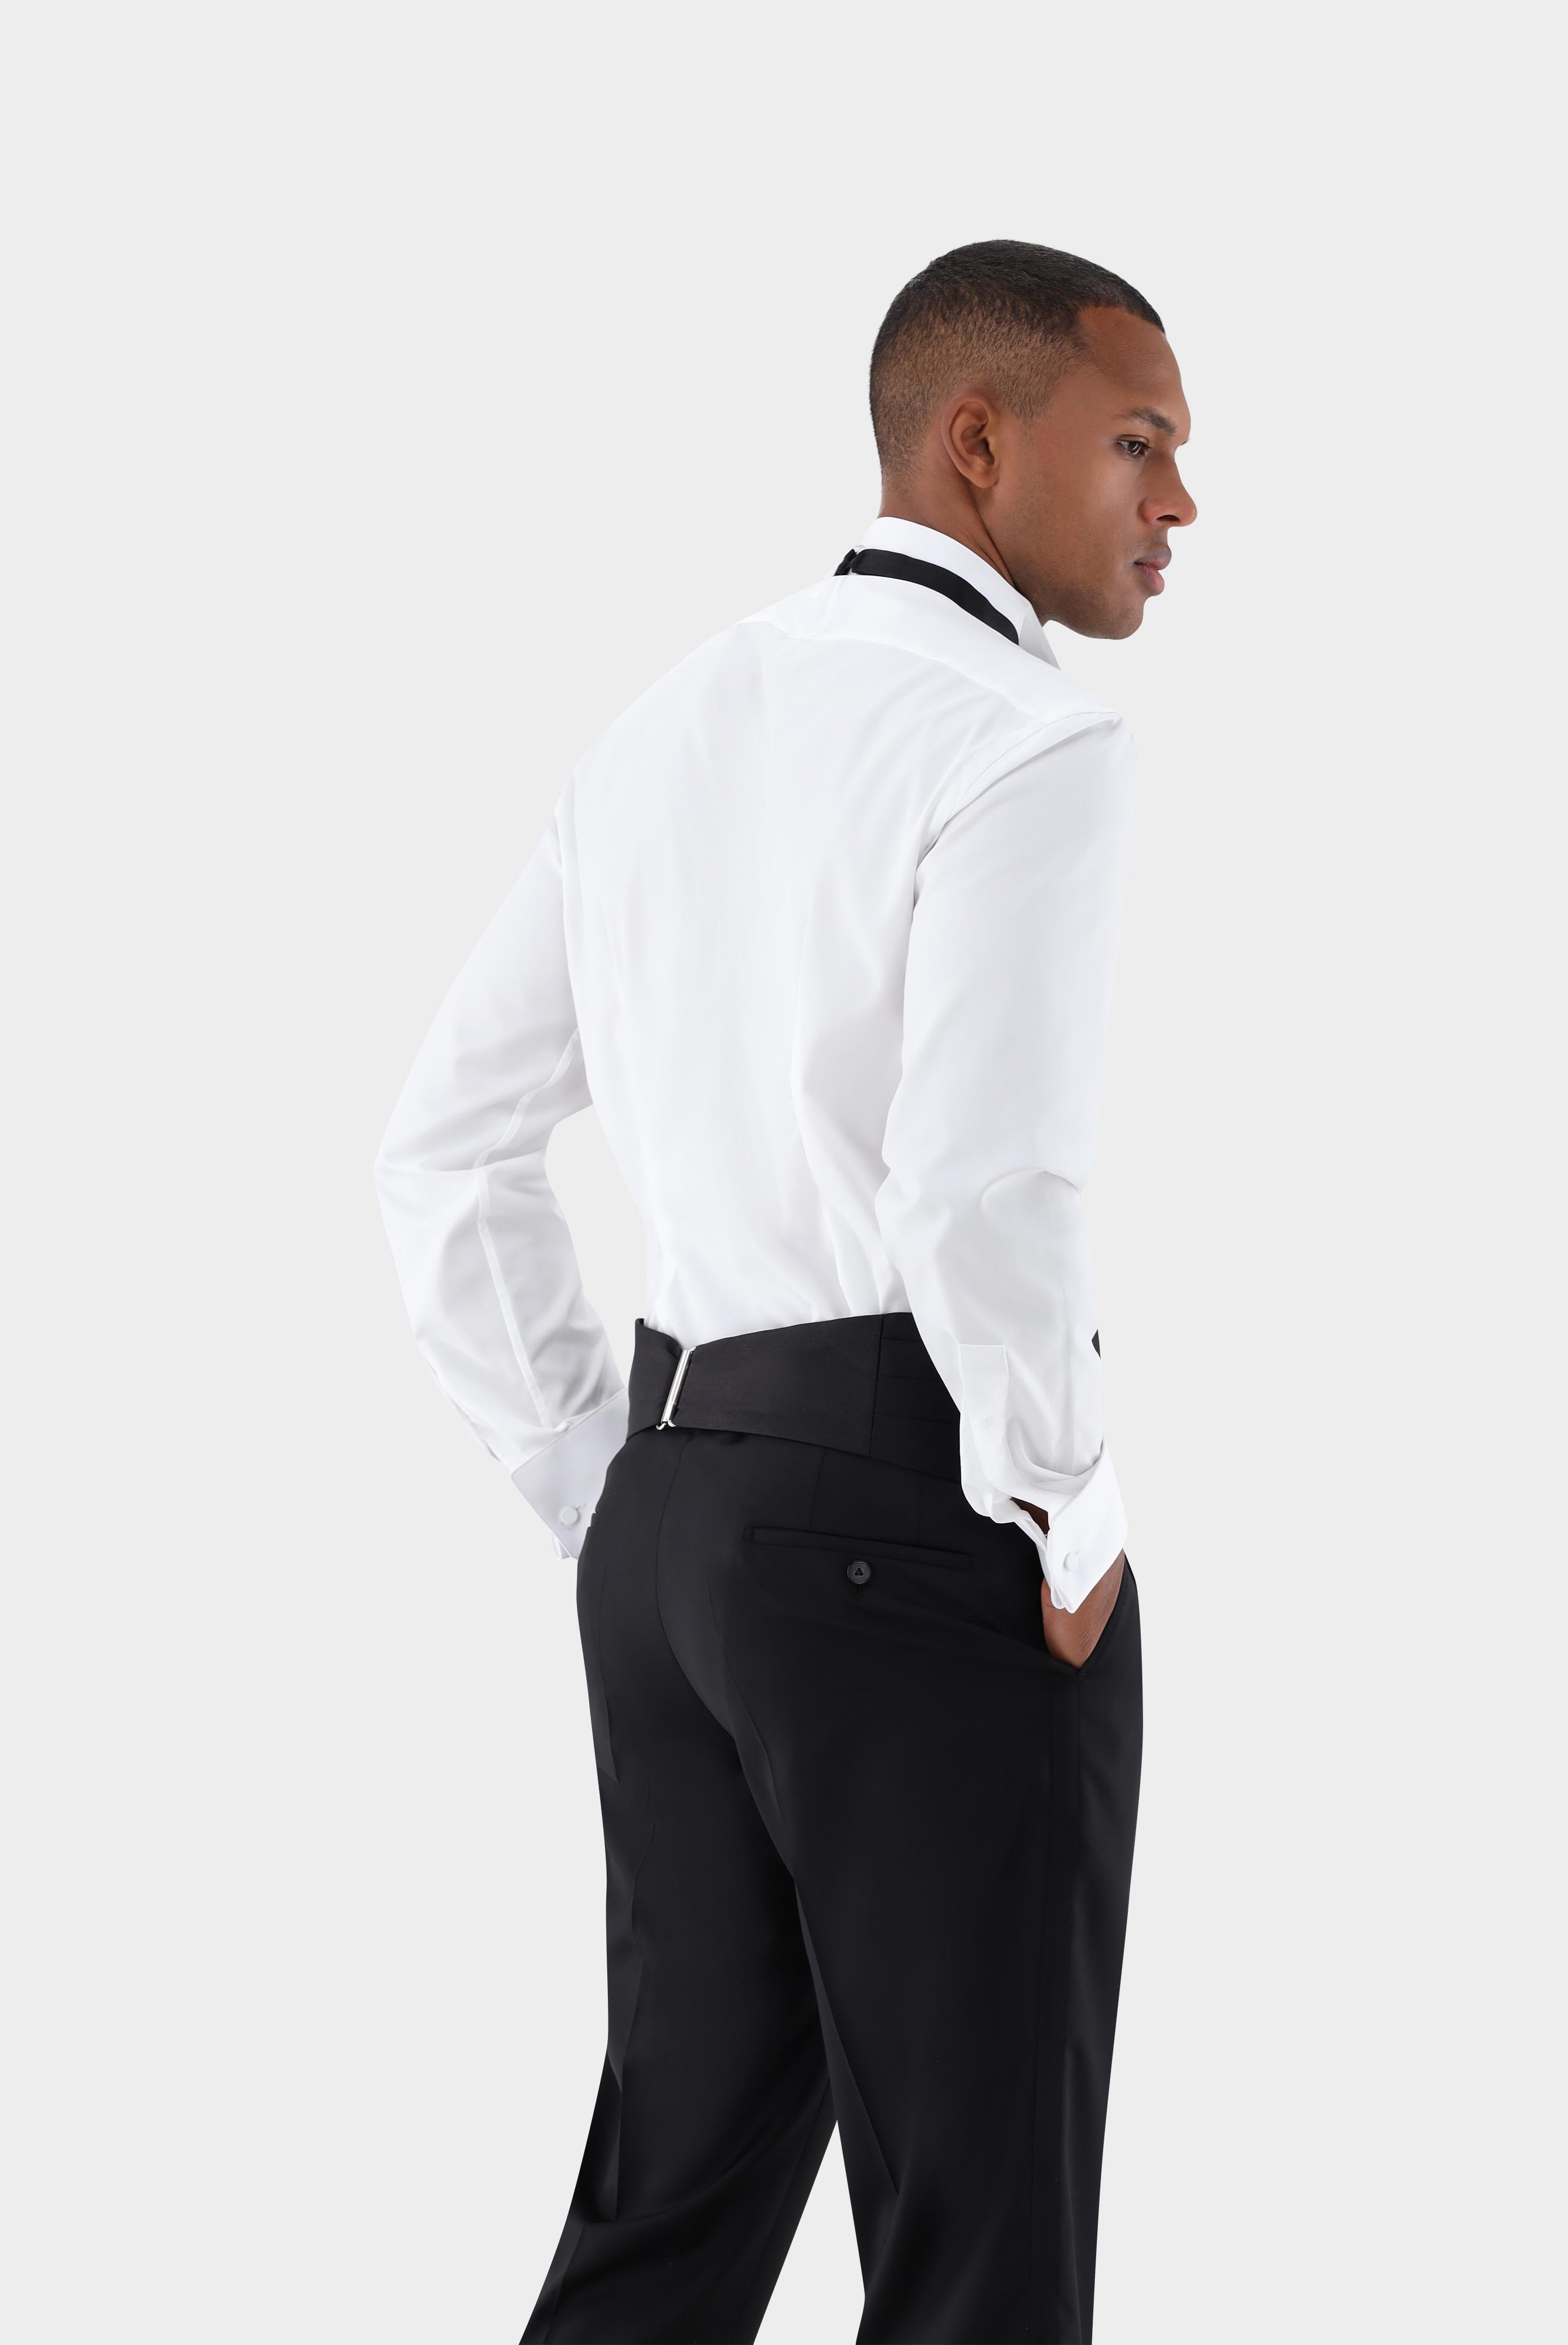 Festliche Hemden+Tuxedo shirt with wing collar Tailor Fit+20.2064.NV.130648.000.37